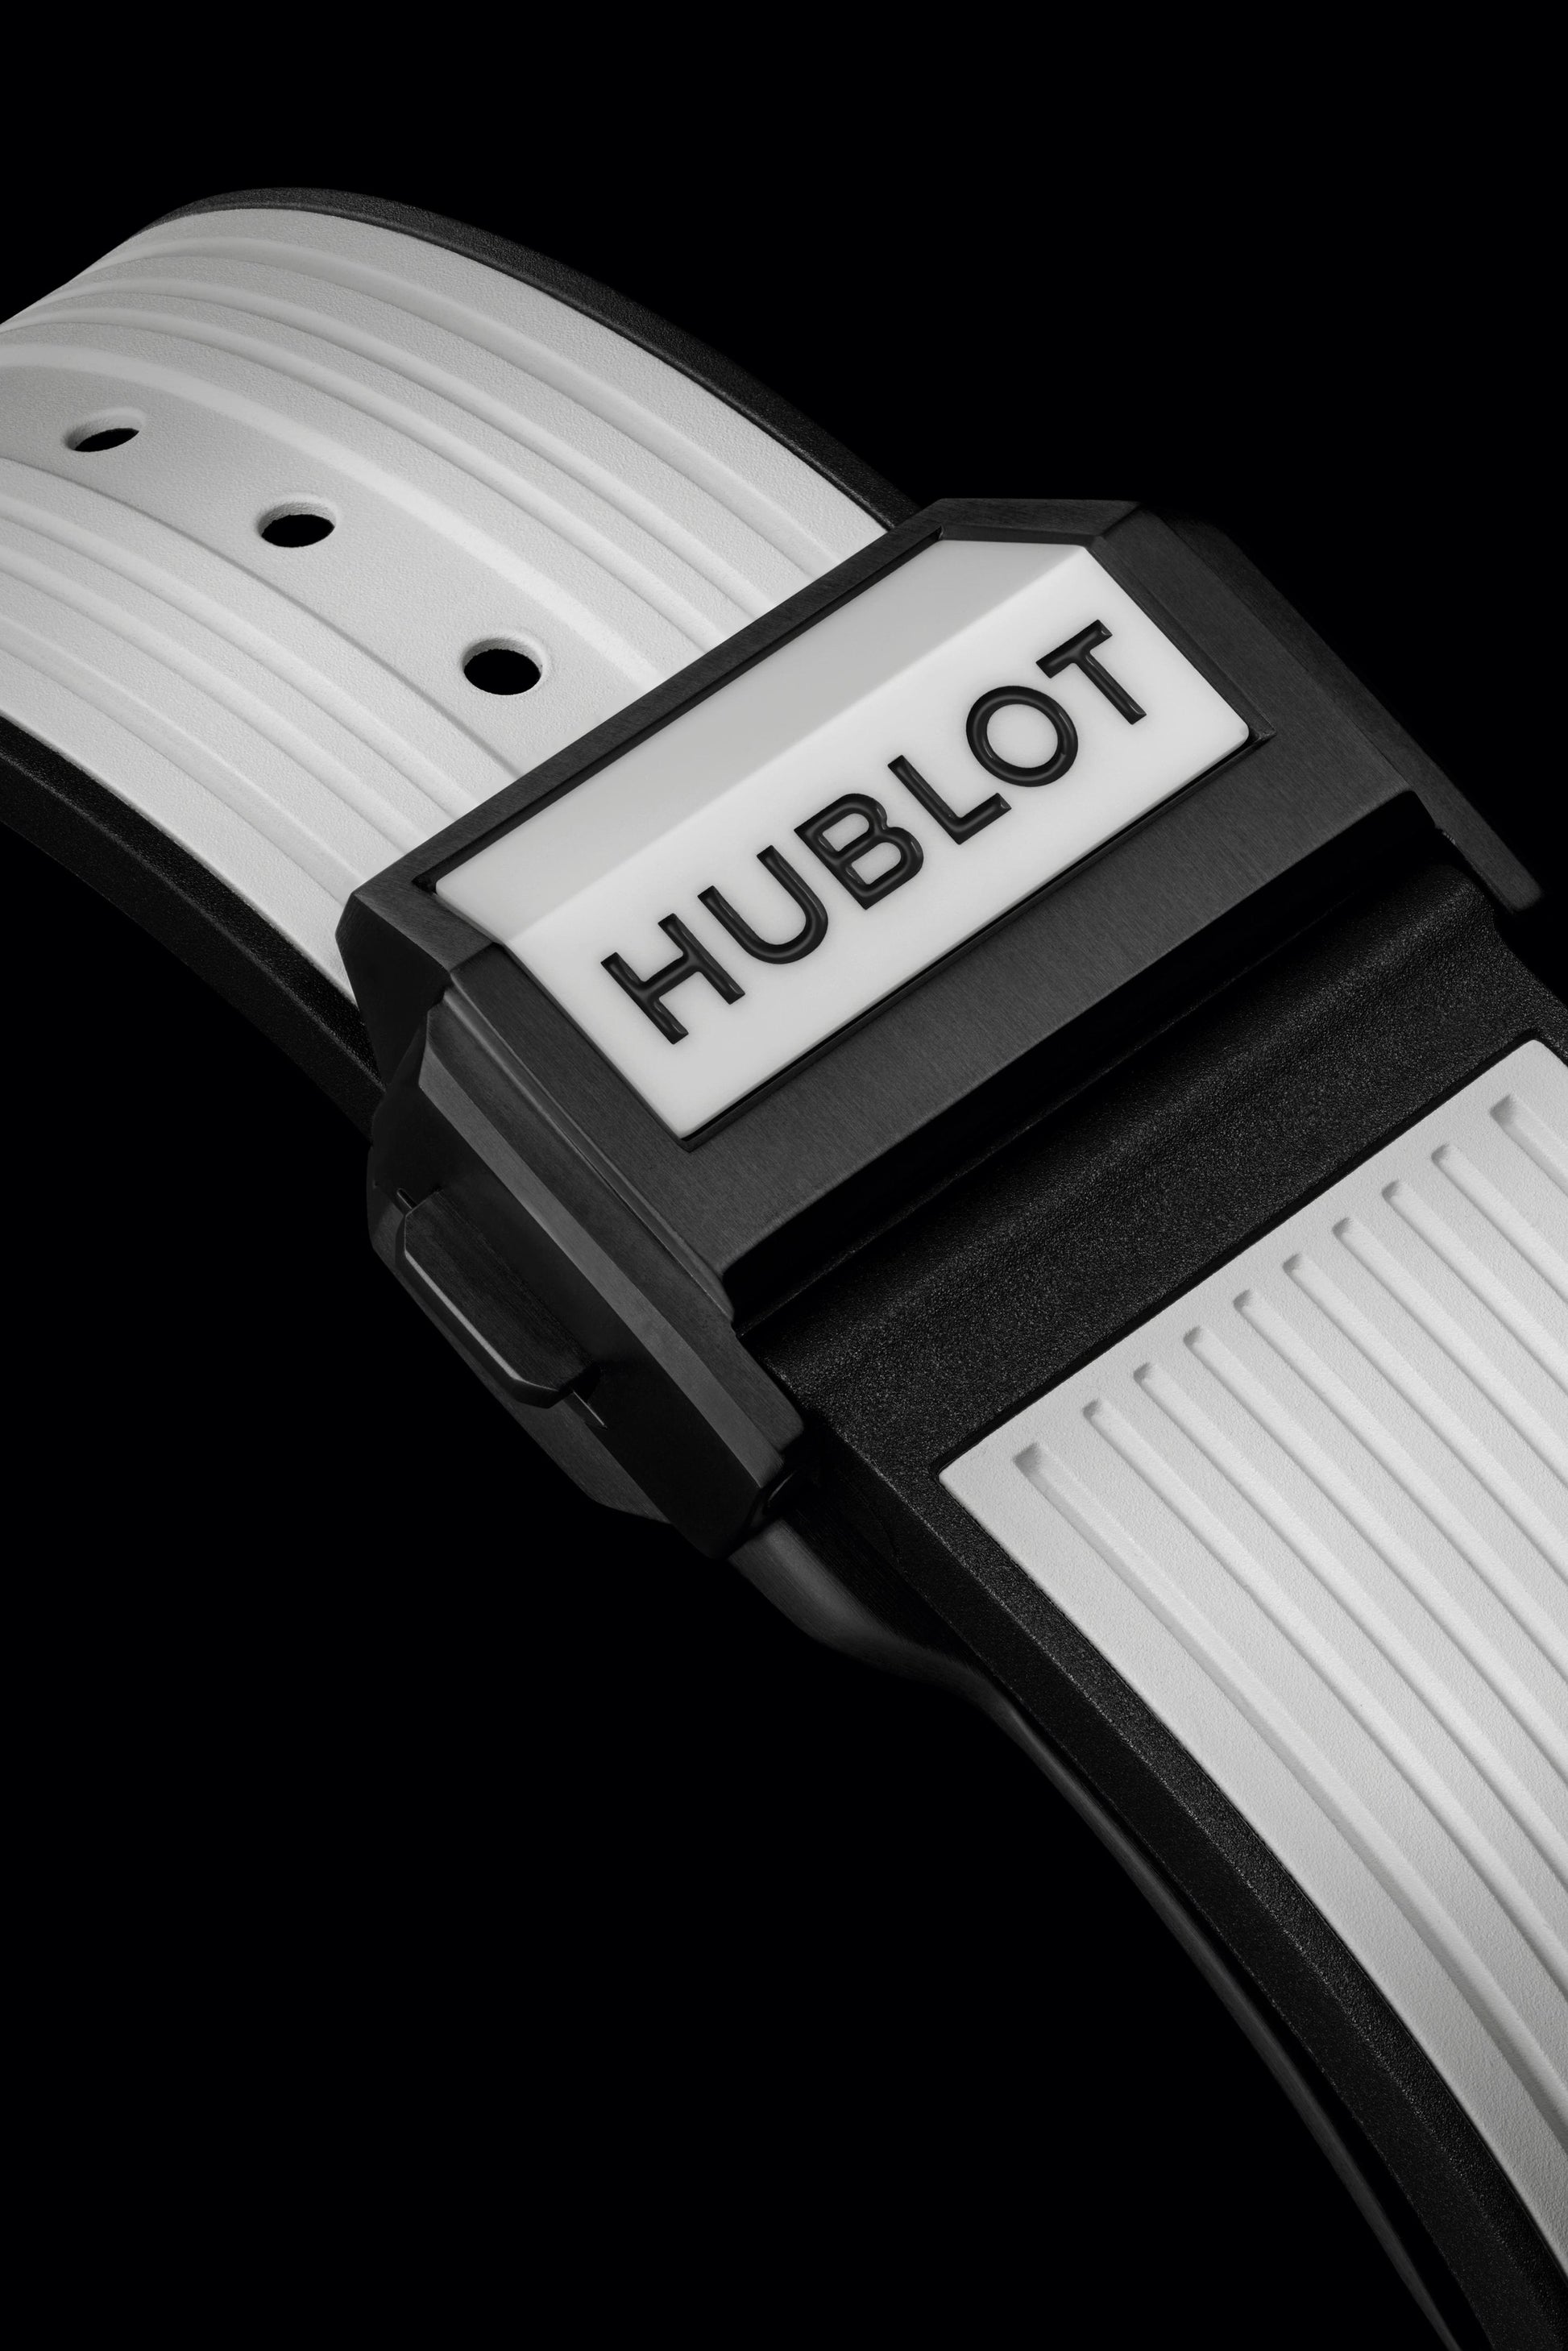 Hublot Big Bang Unico White Ceramic Watch - 42 mm - Black Skeleton Dial - Black and White Rubber Strap-441.HX.1171.RX